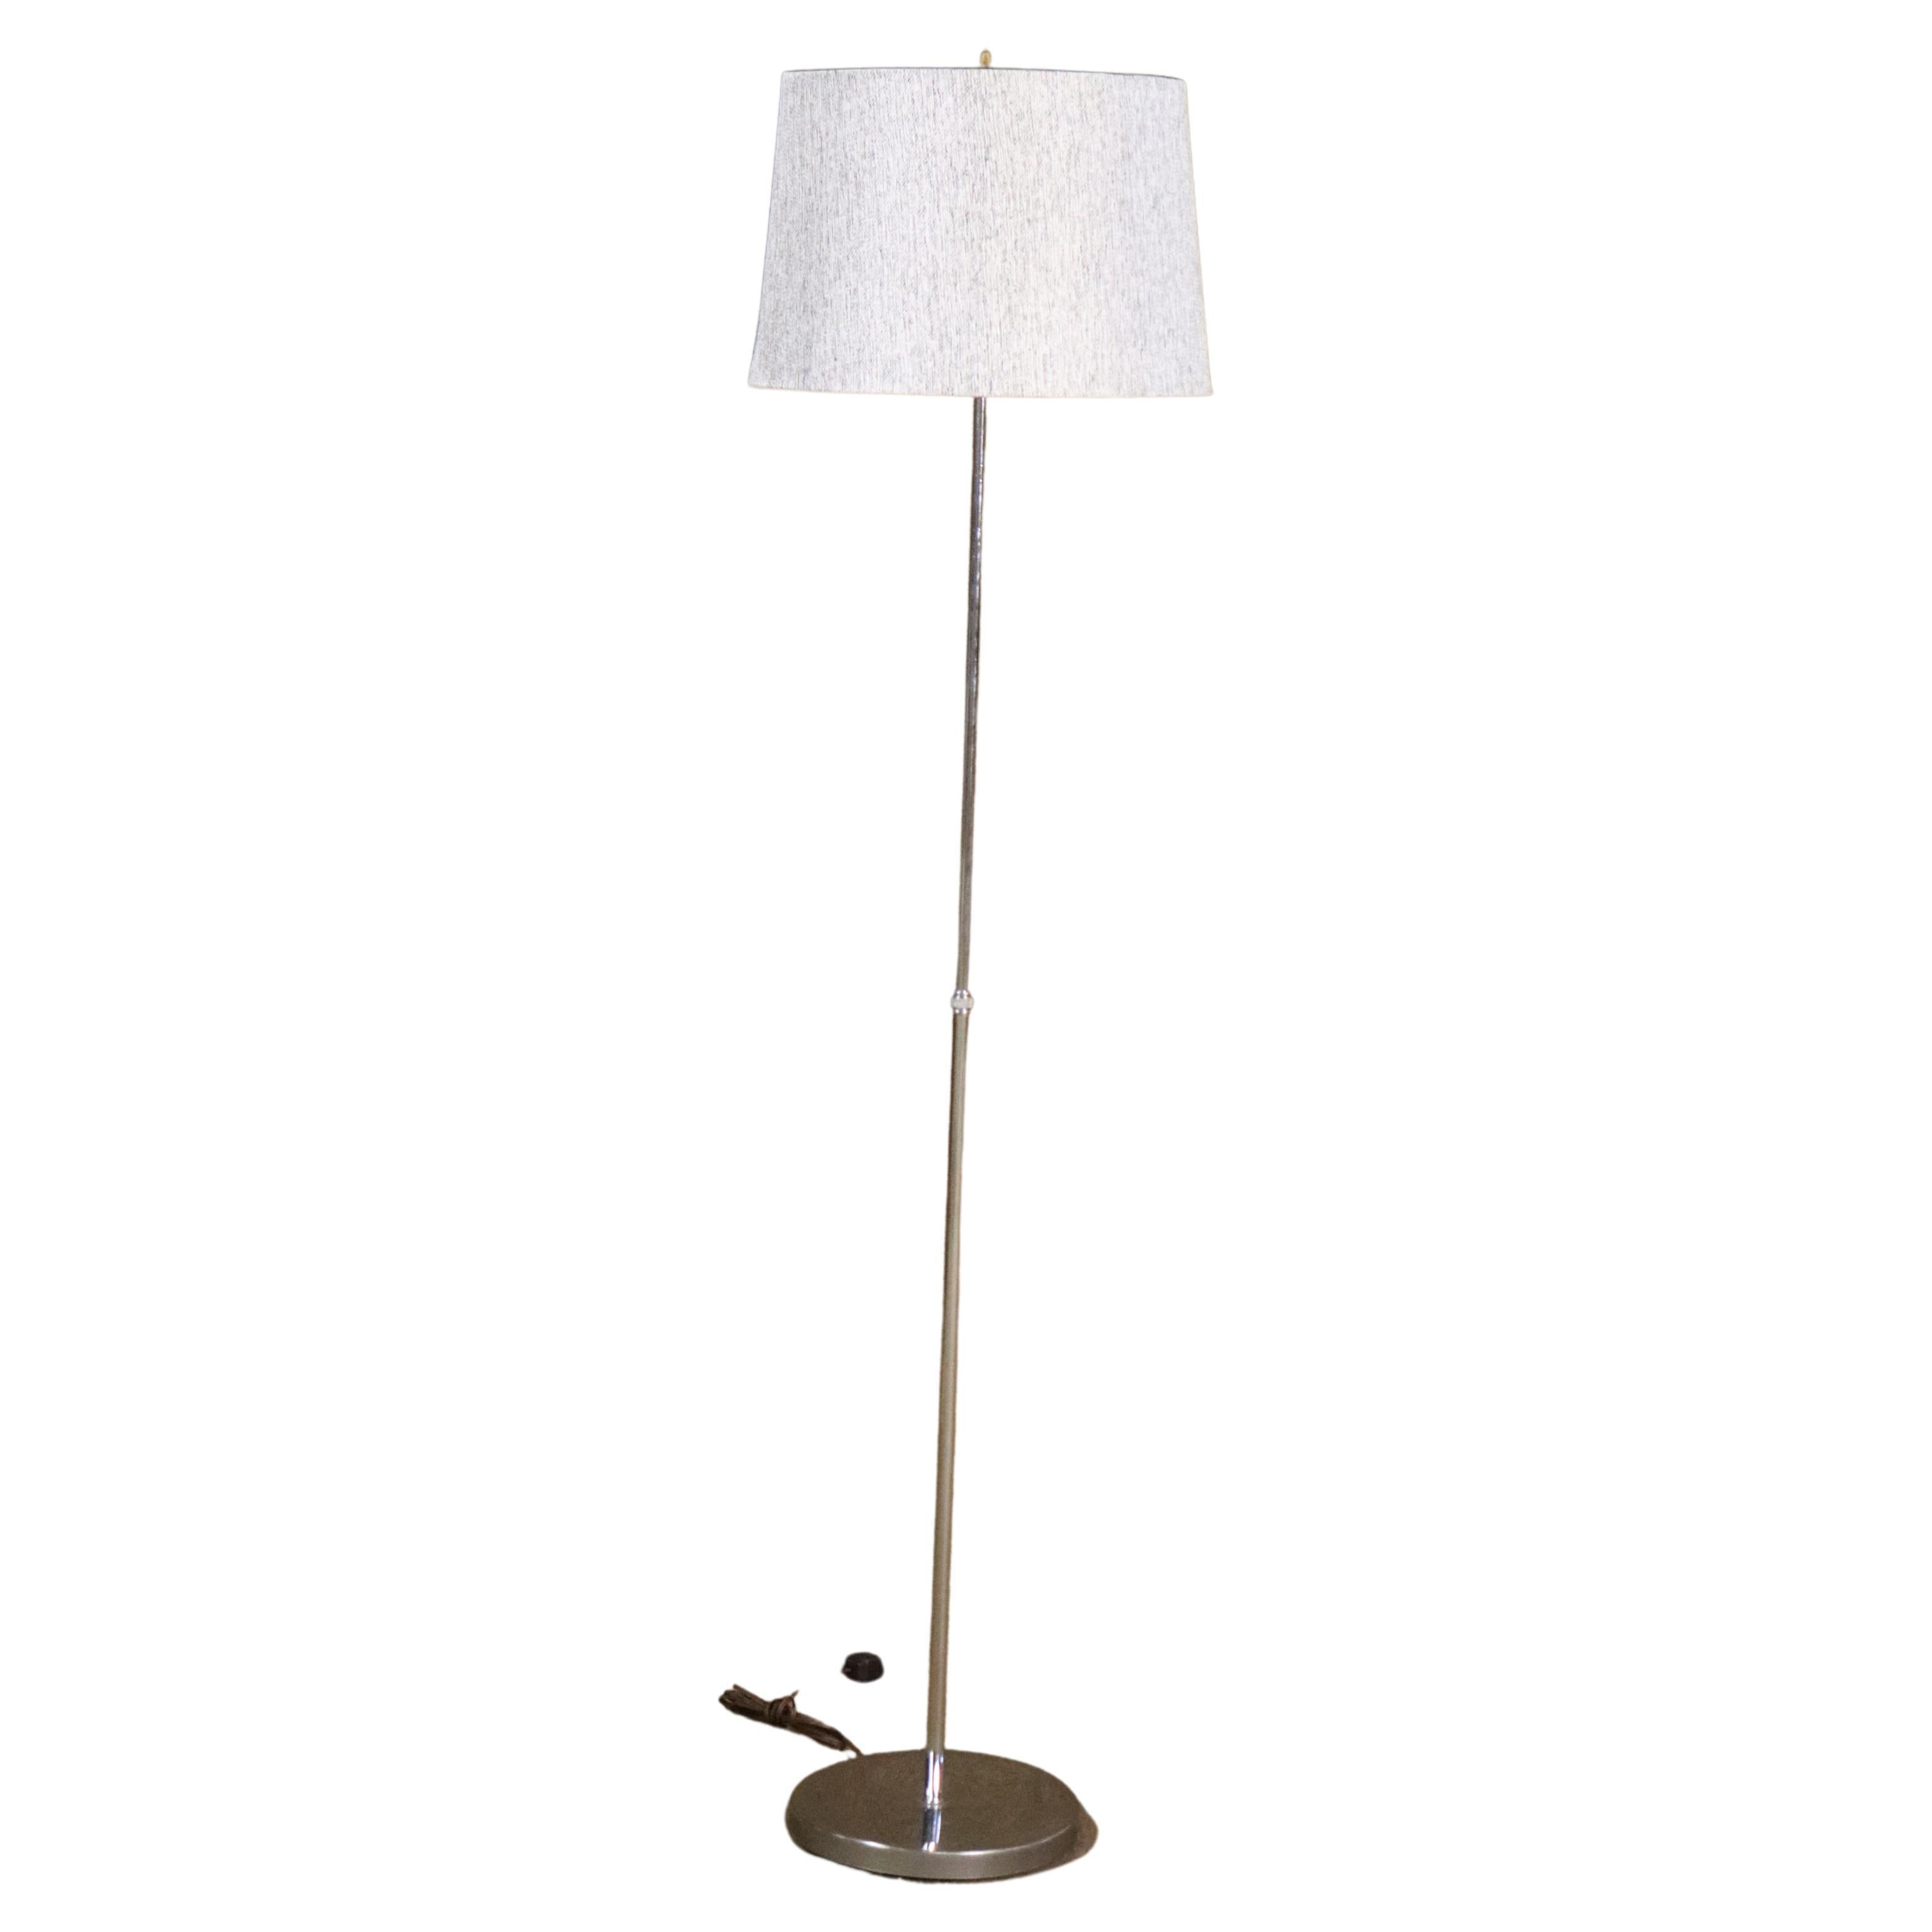 Adjustable Chrome Floor Lamp For Sale